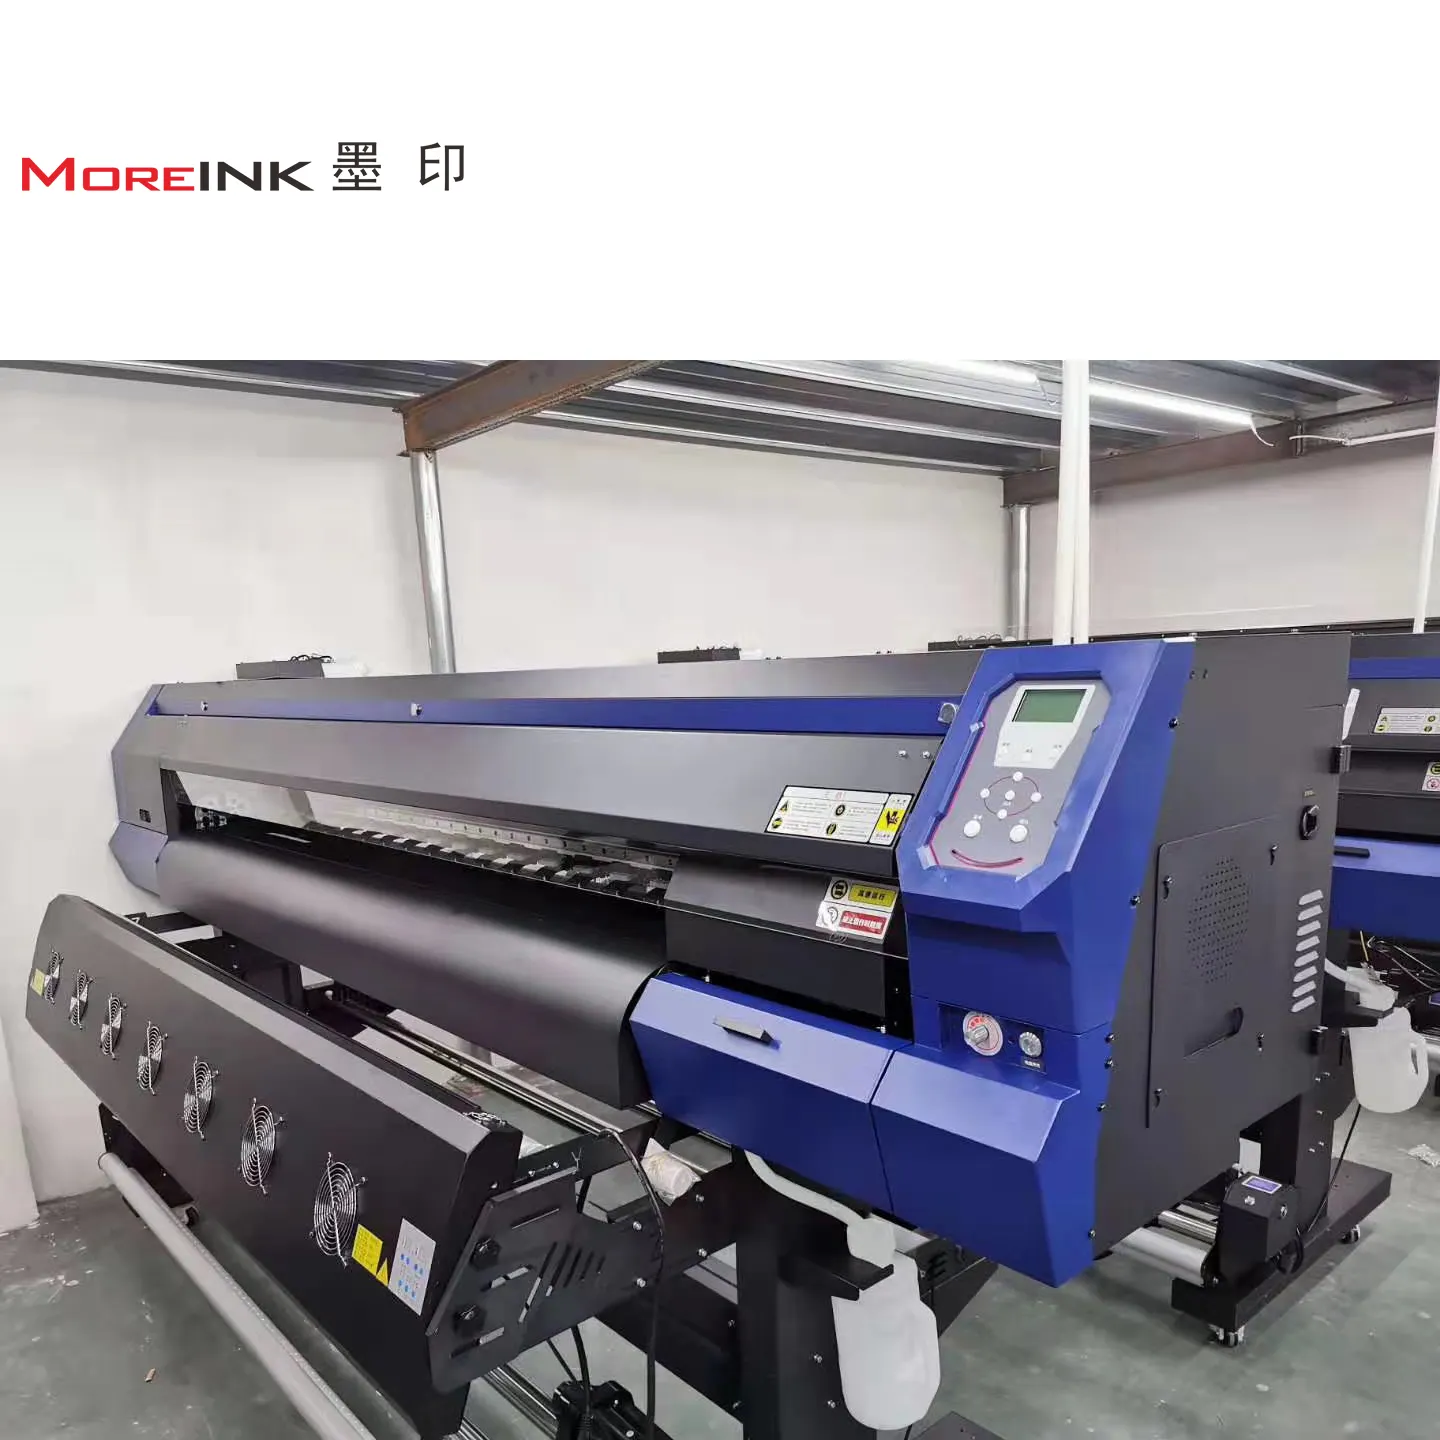 ENJET-impresora Digital de sublimación, máquina de impresión textil de poliéster, 1,9 m/2,2 m/2,6 m/3,2 m i3200/4720